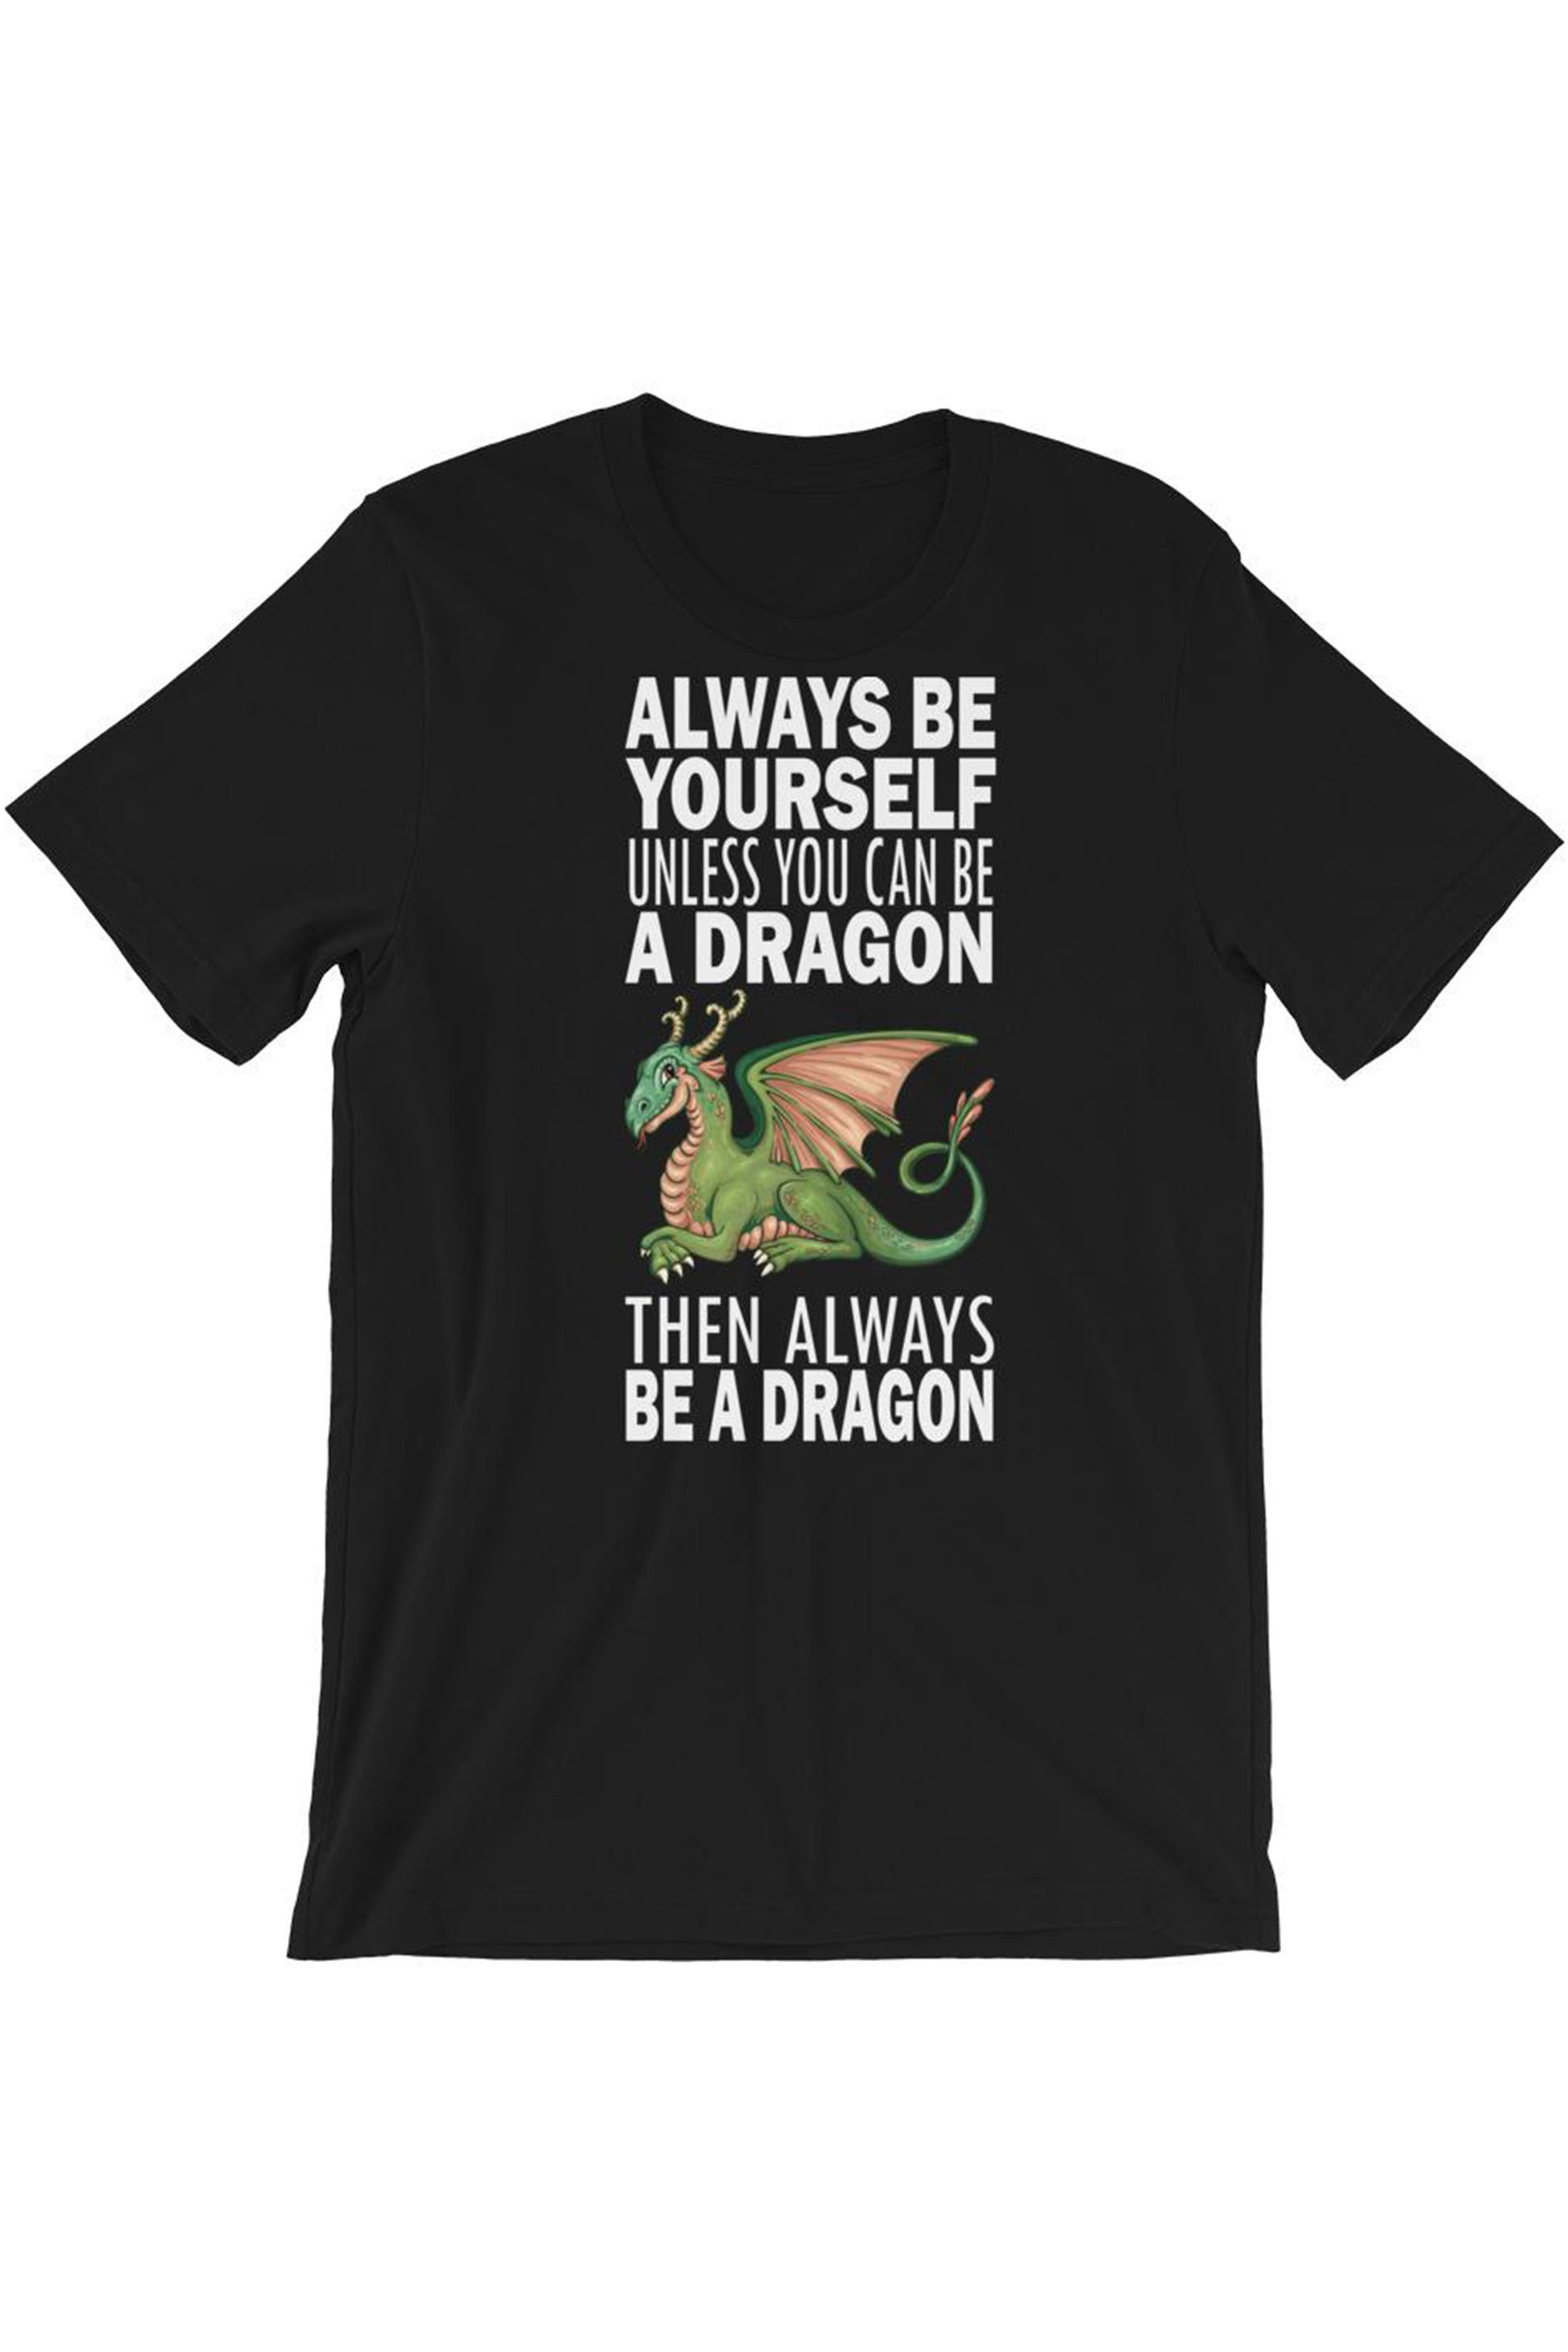 "A Dragon" T-Shirt